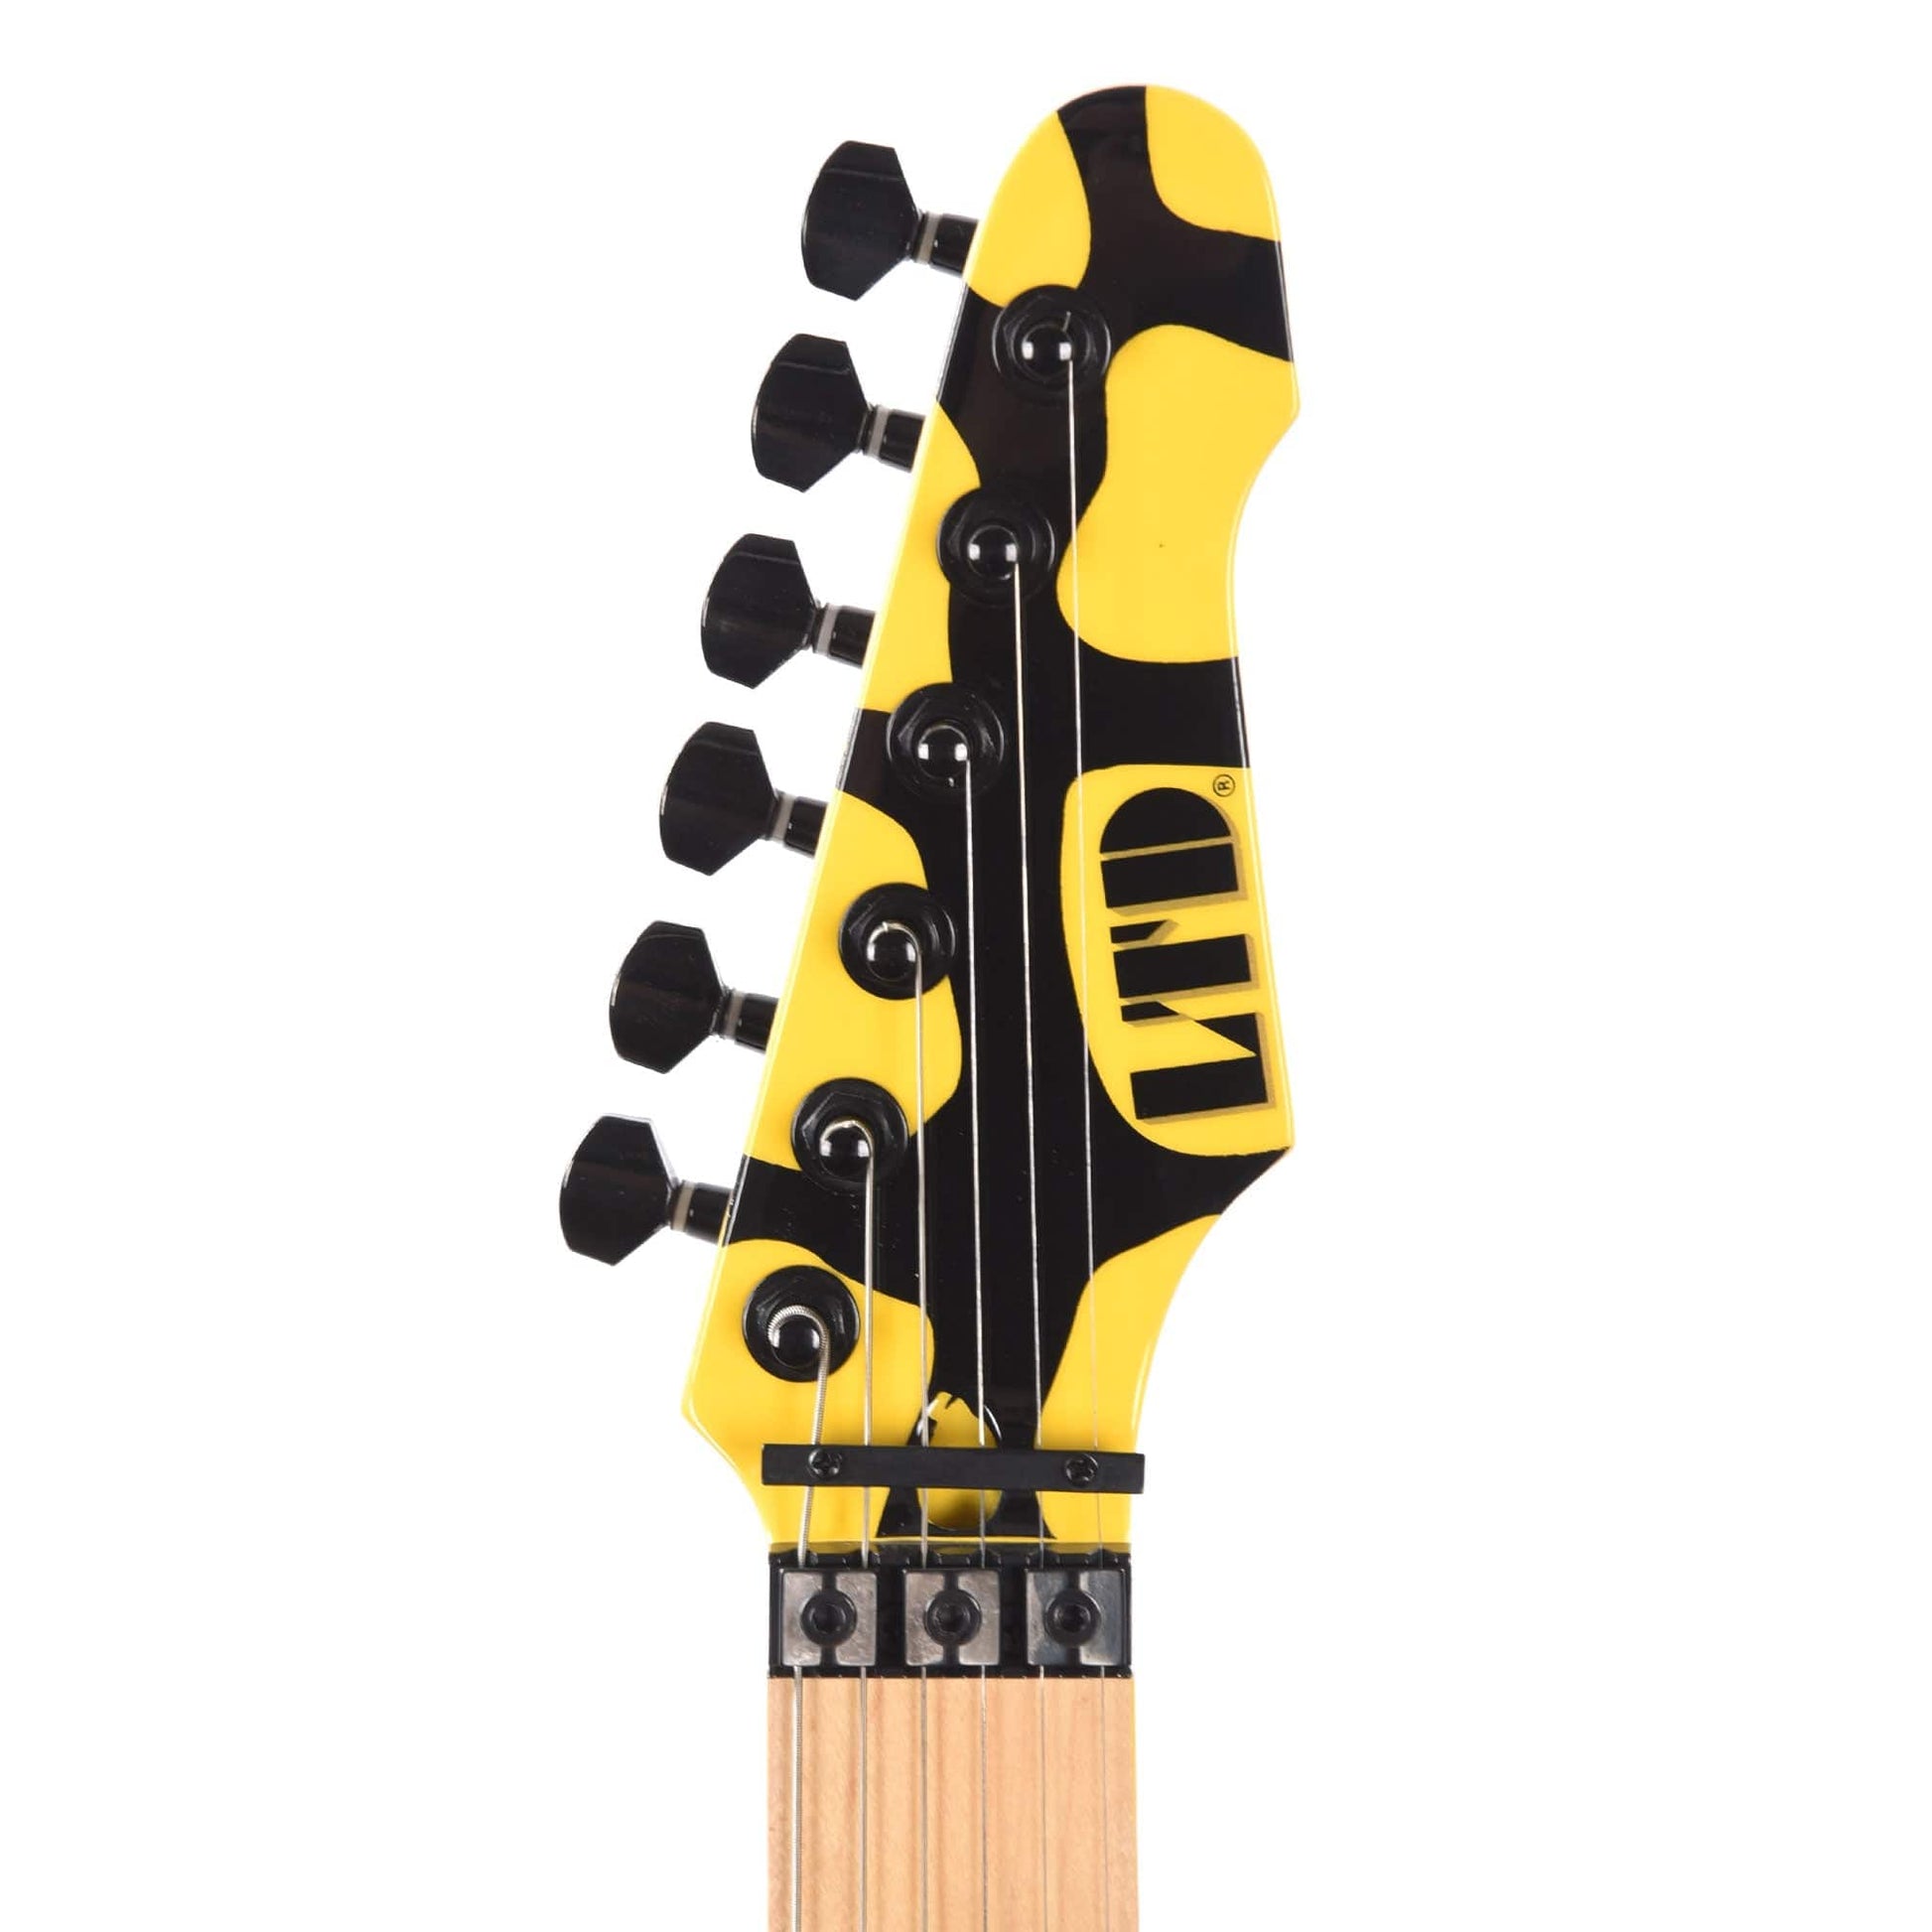 ESP LTD George Lynch GL-200MT Yellow w/ Tiger Graphic Electric Guitars / Solid Body